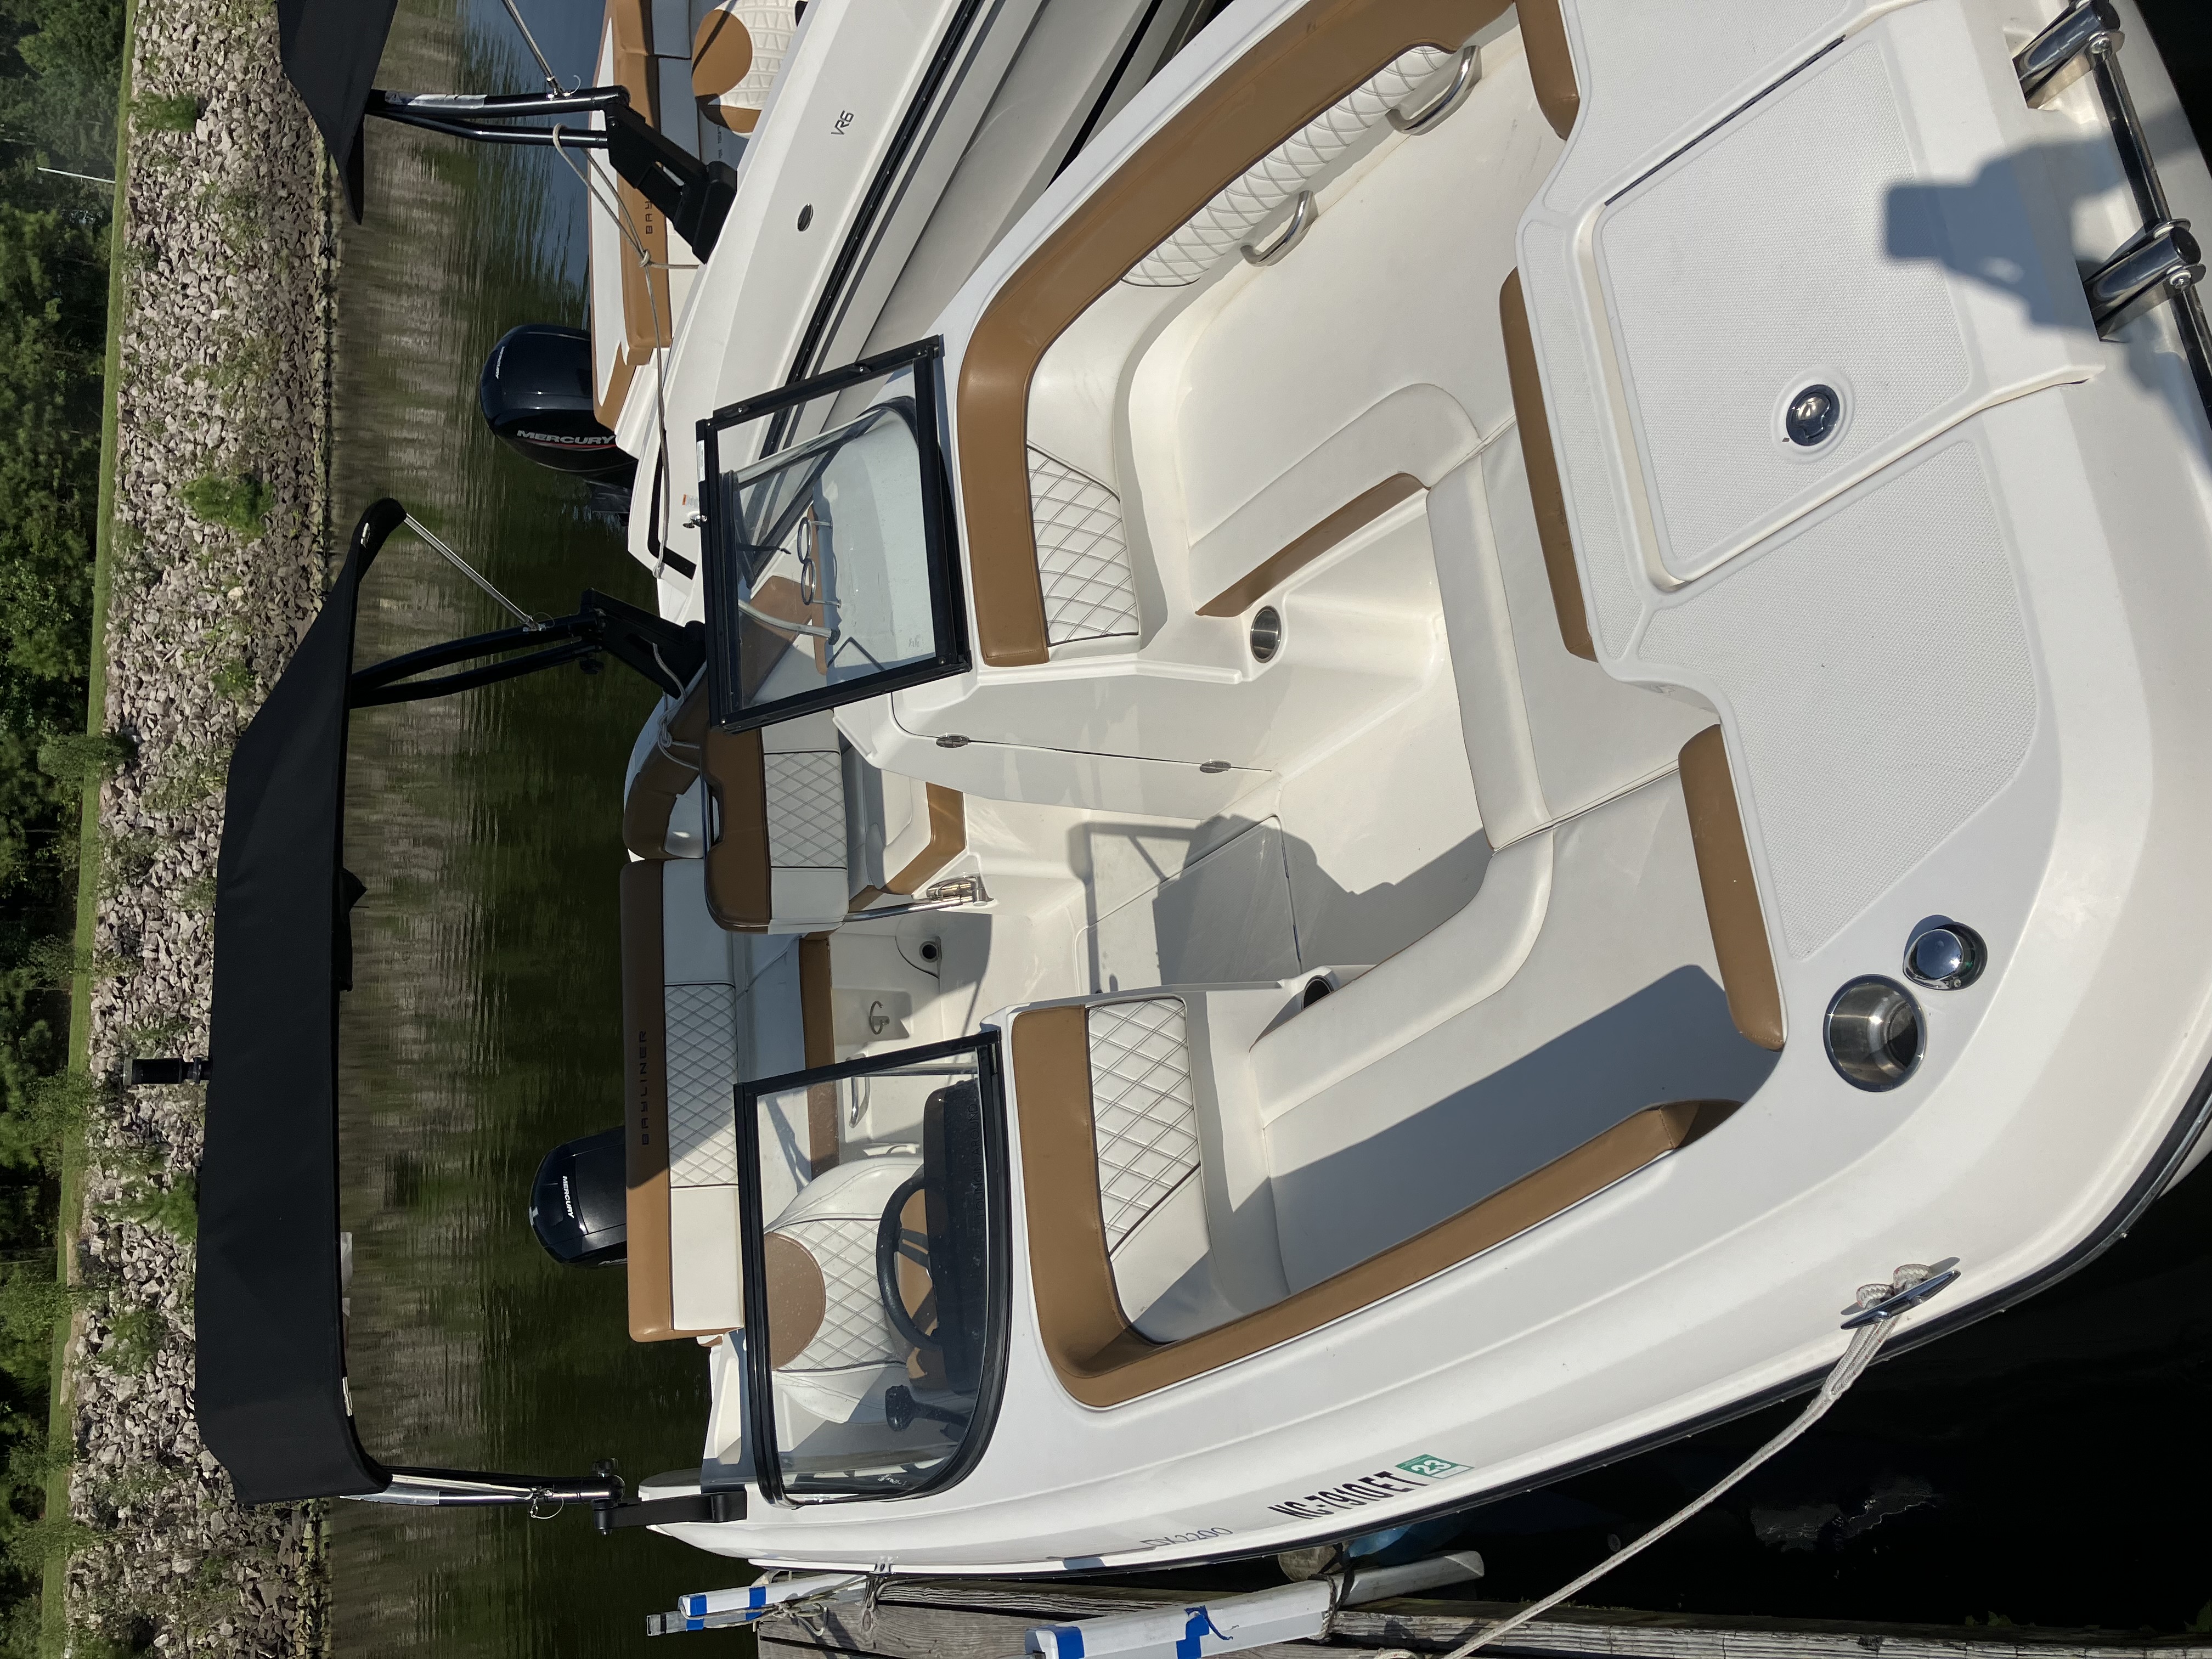 LOUNGIN' AROUND (22' Bayliner Deck Boat 150 HP - Cruising) (*NO TUBING ALLOWED*)